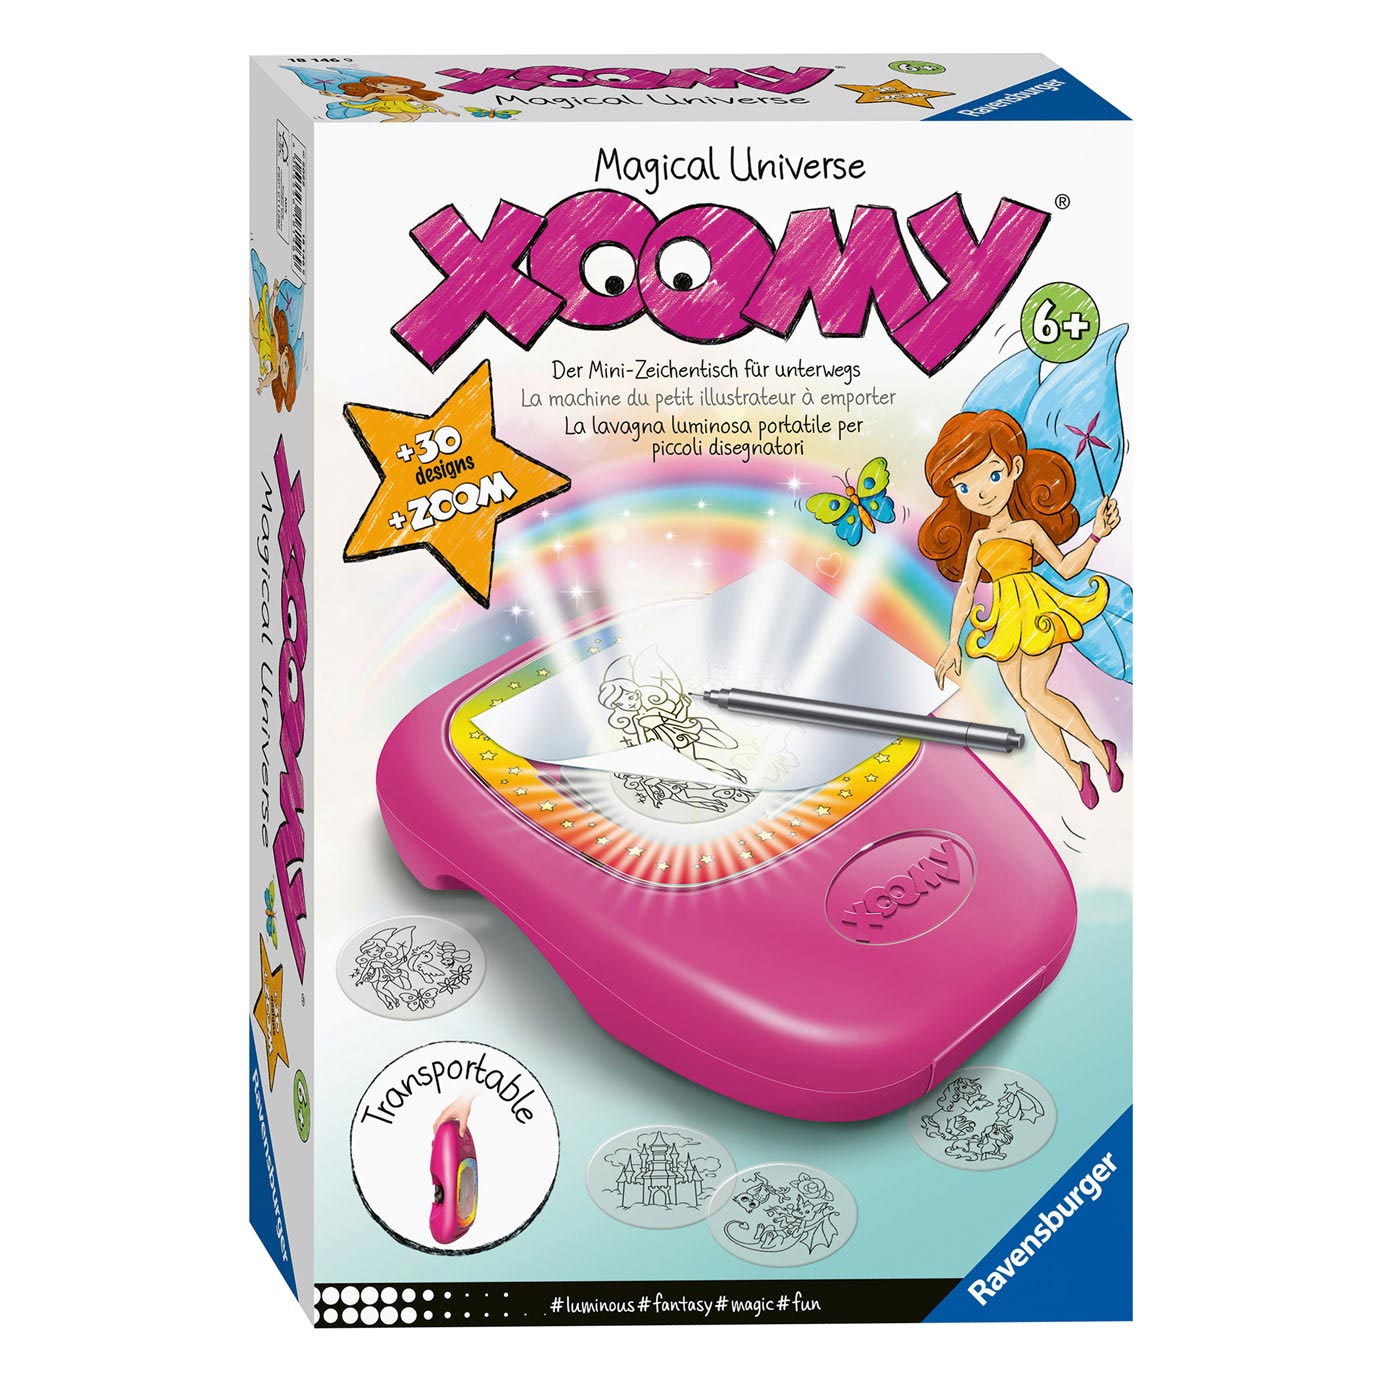 Xoomy  Thimble Toys